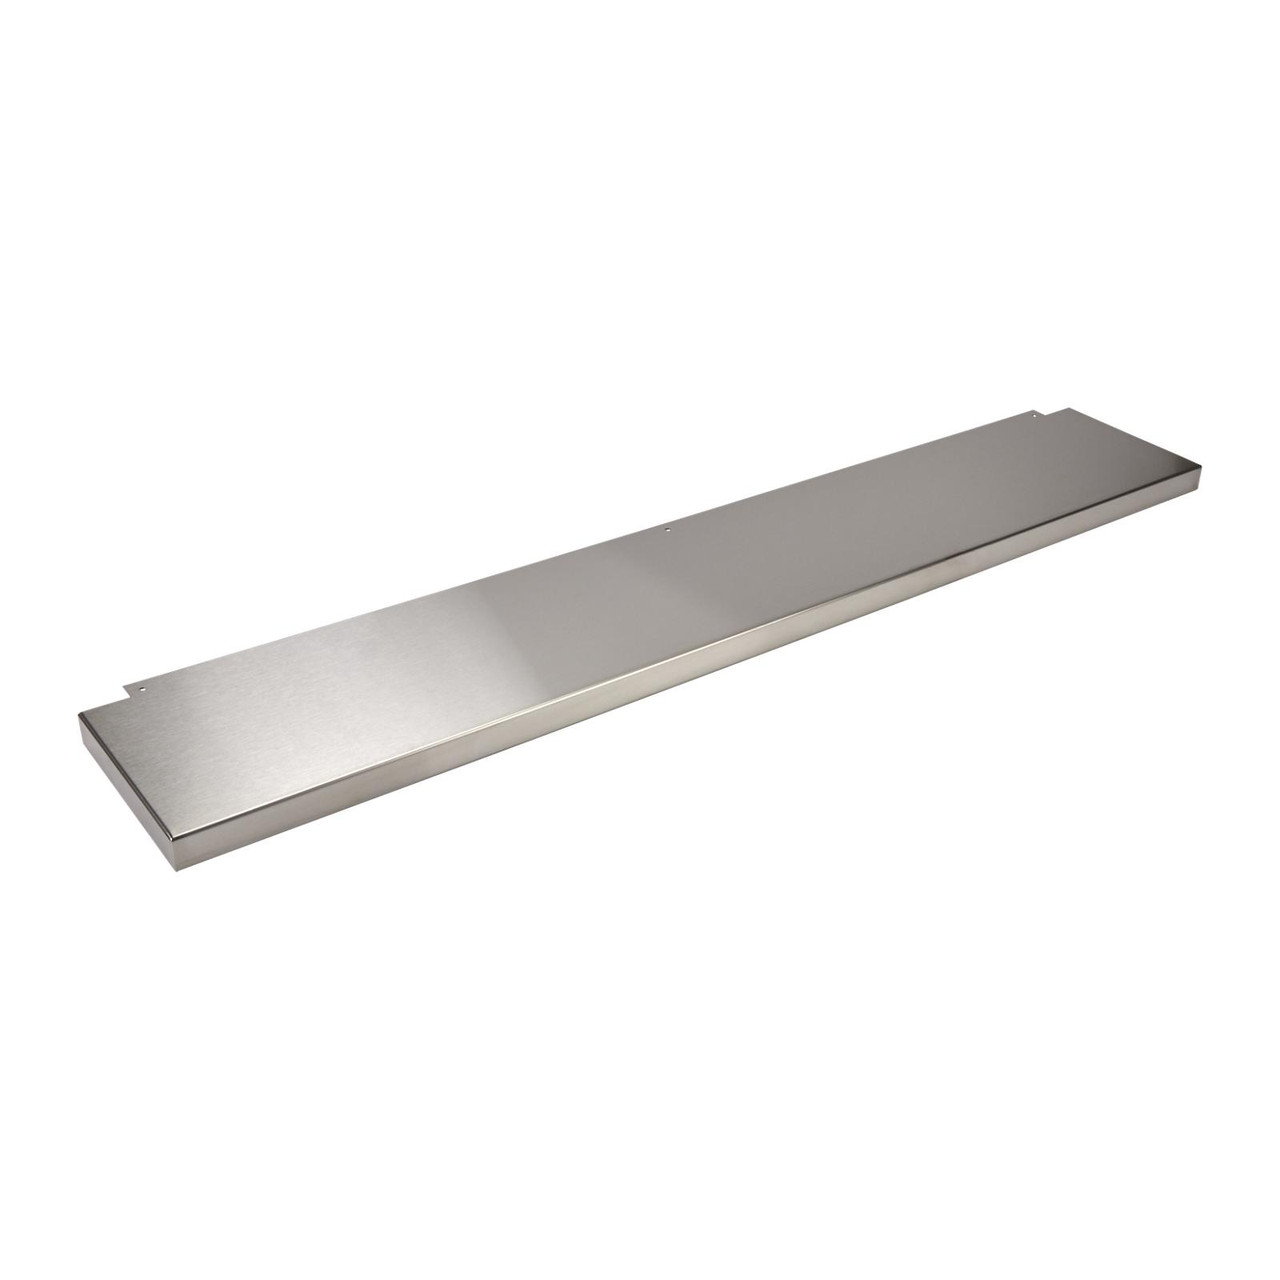 Stainless Steel Backsplash with Dual Position Shelf